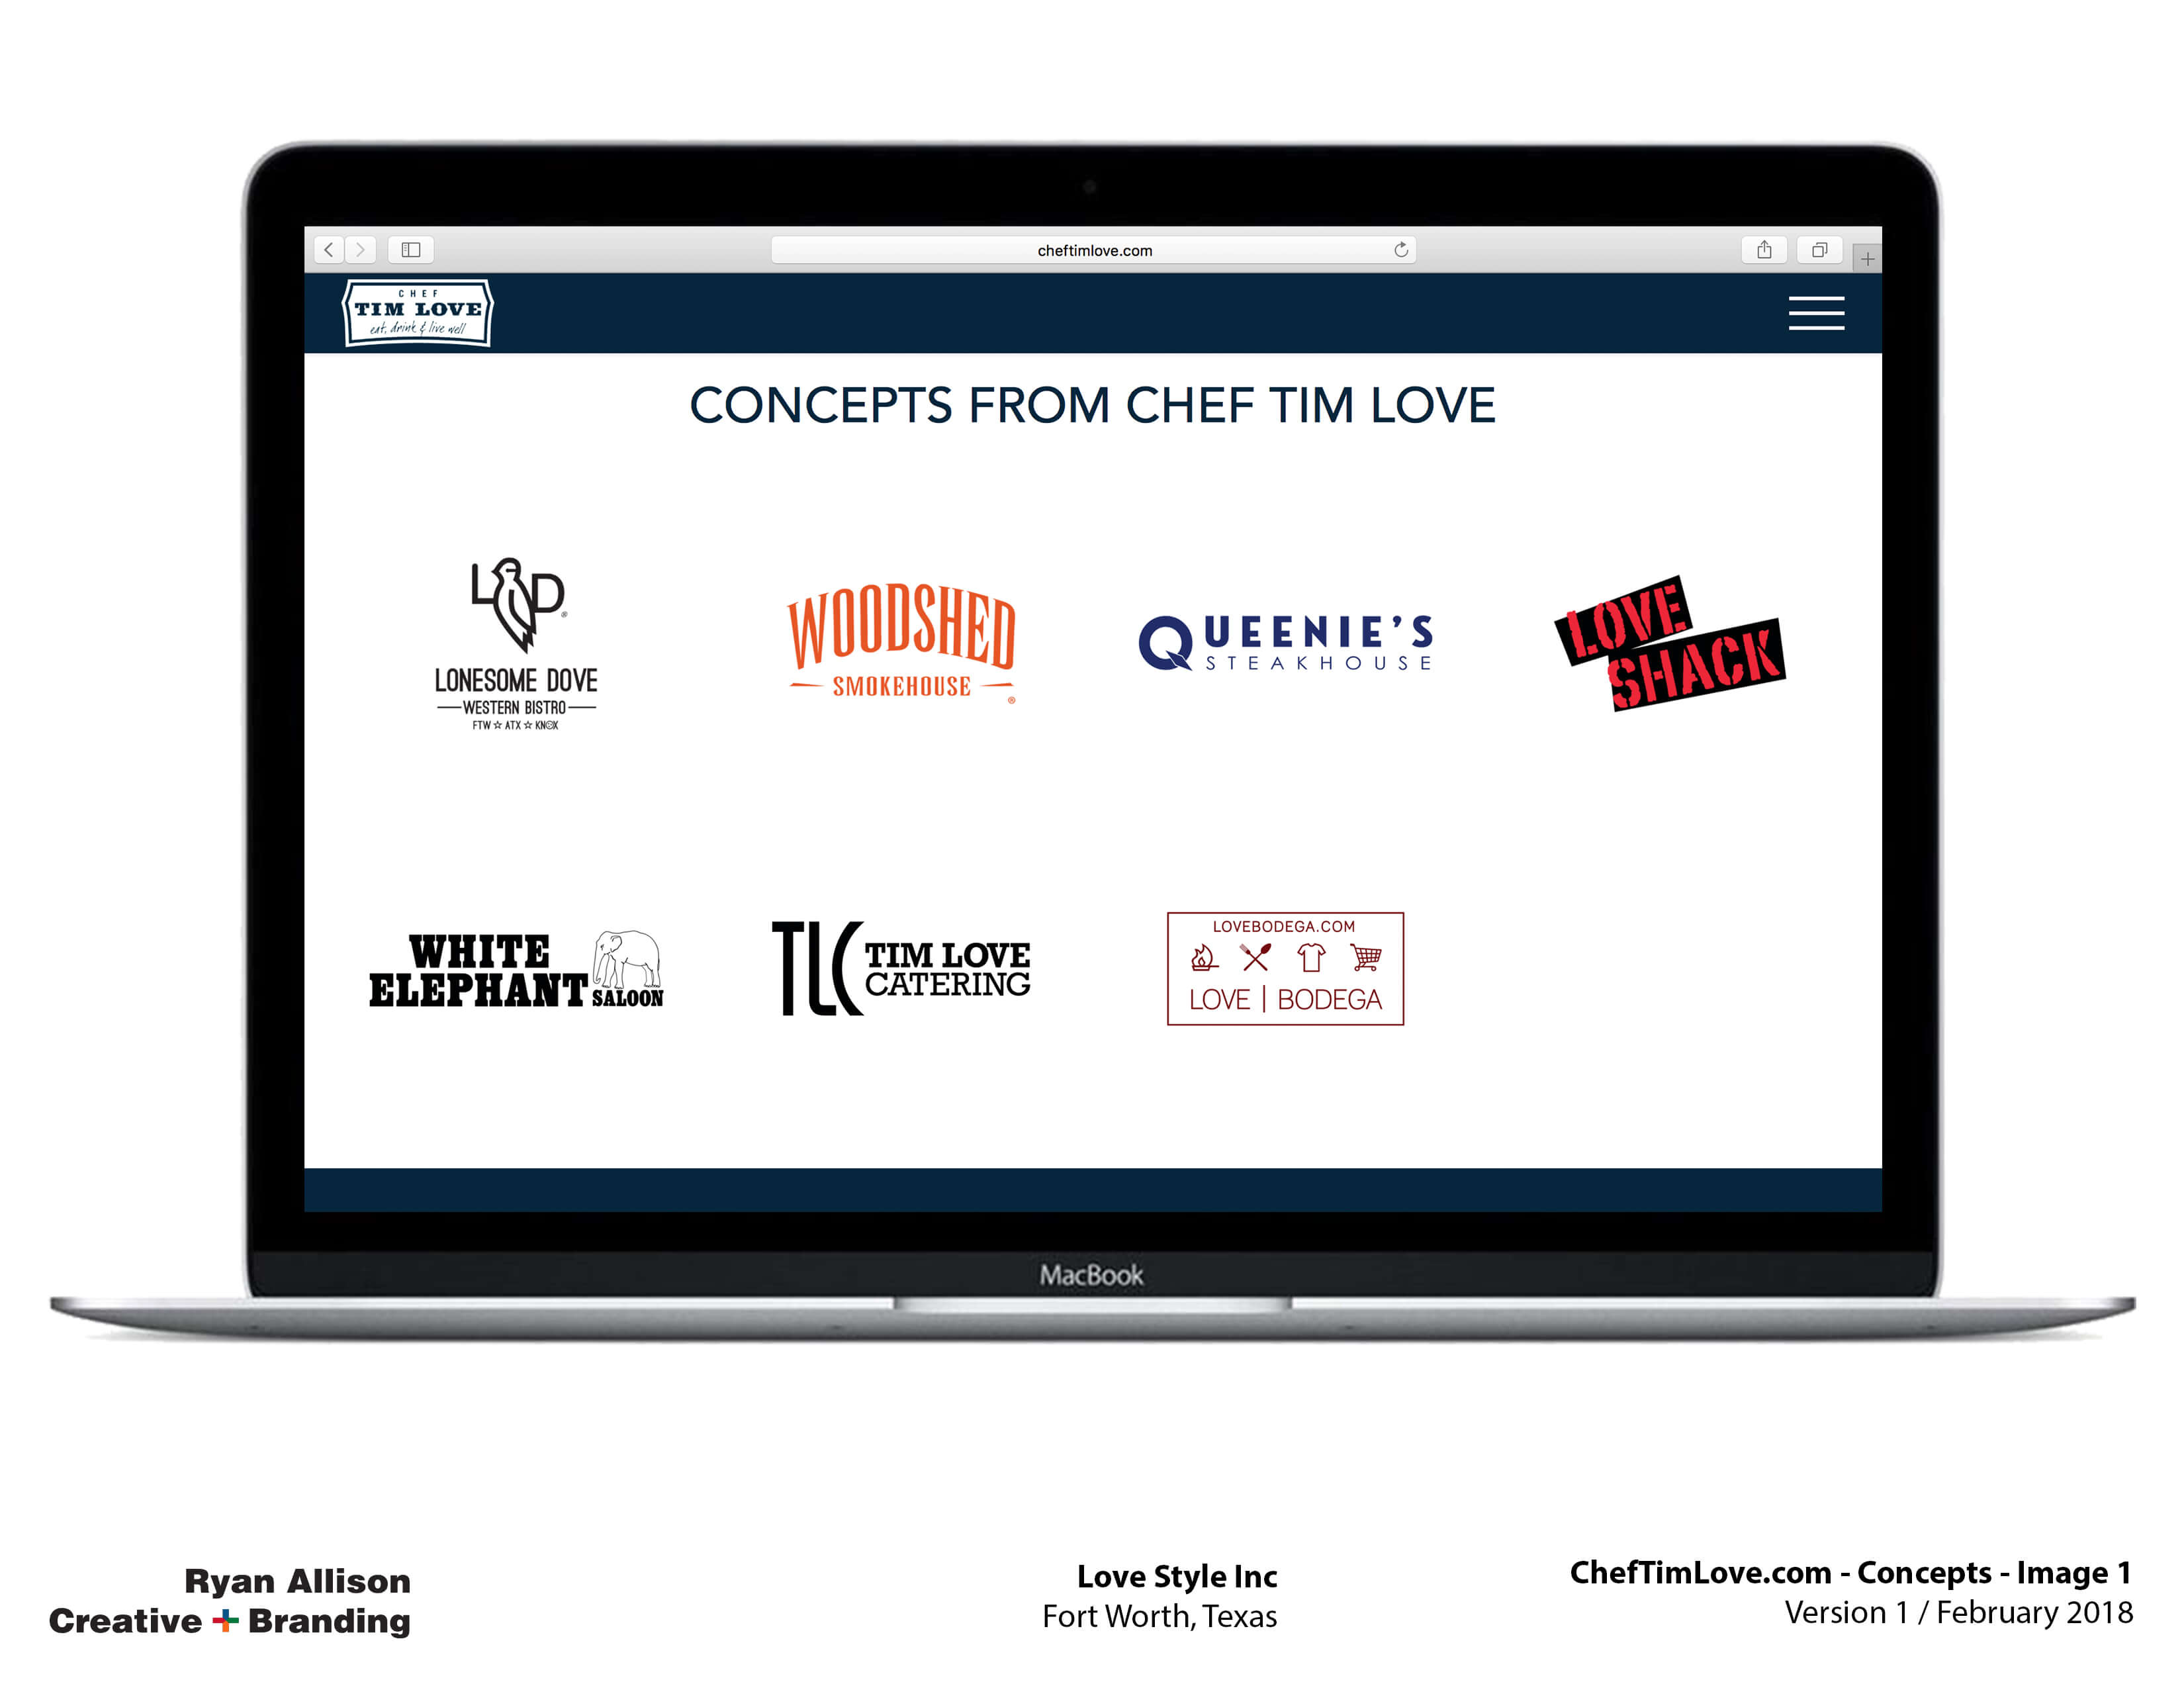 Love Style Inc Chef Tim Love Website Concepts 1 - Project - Ryan Allison Creative + Branding